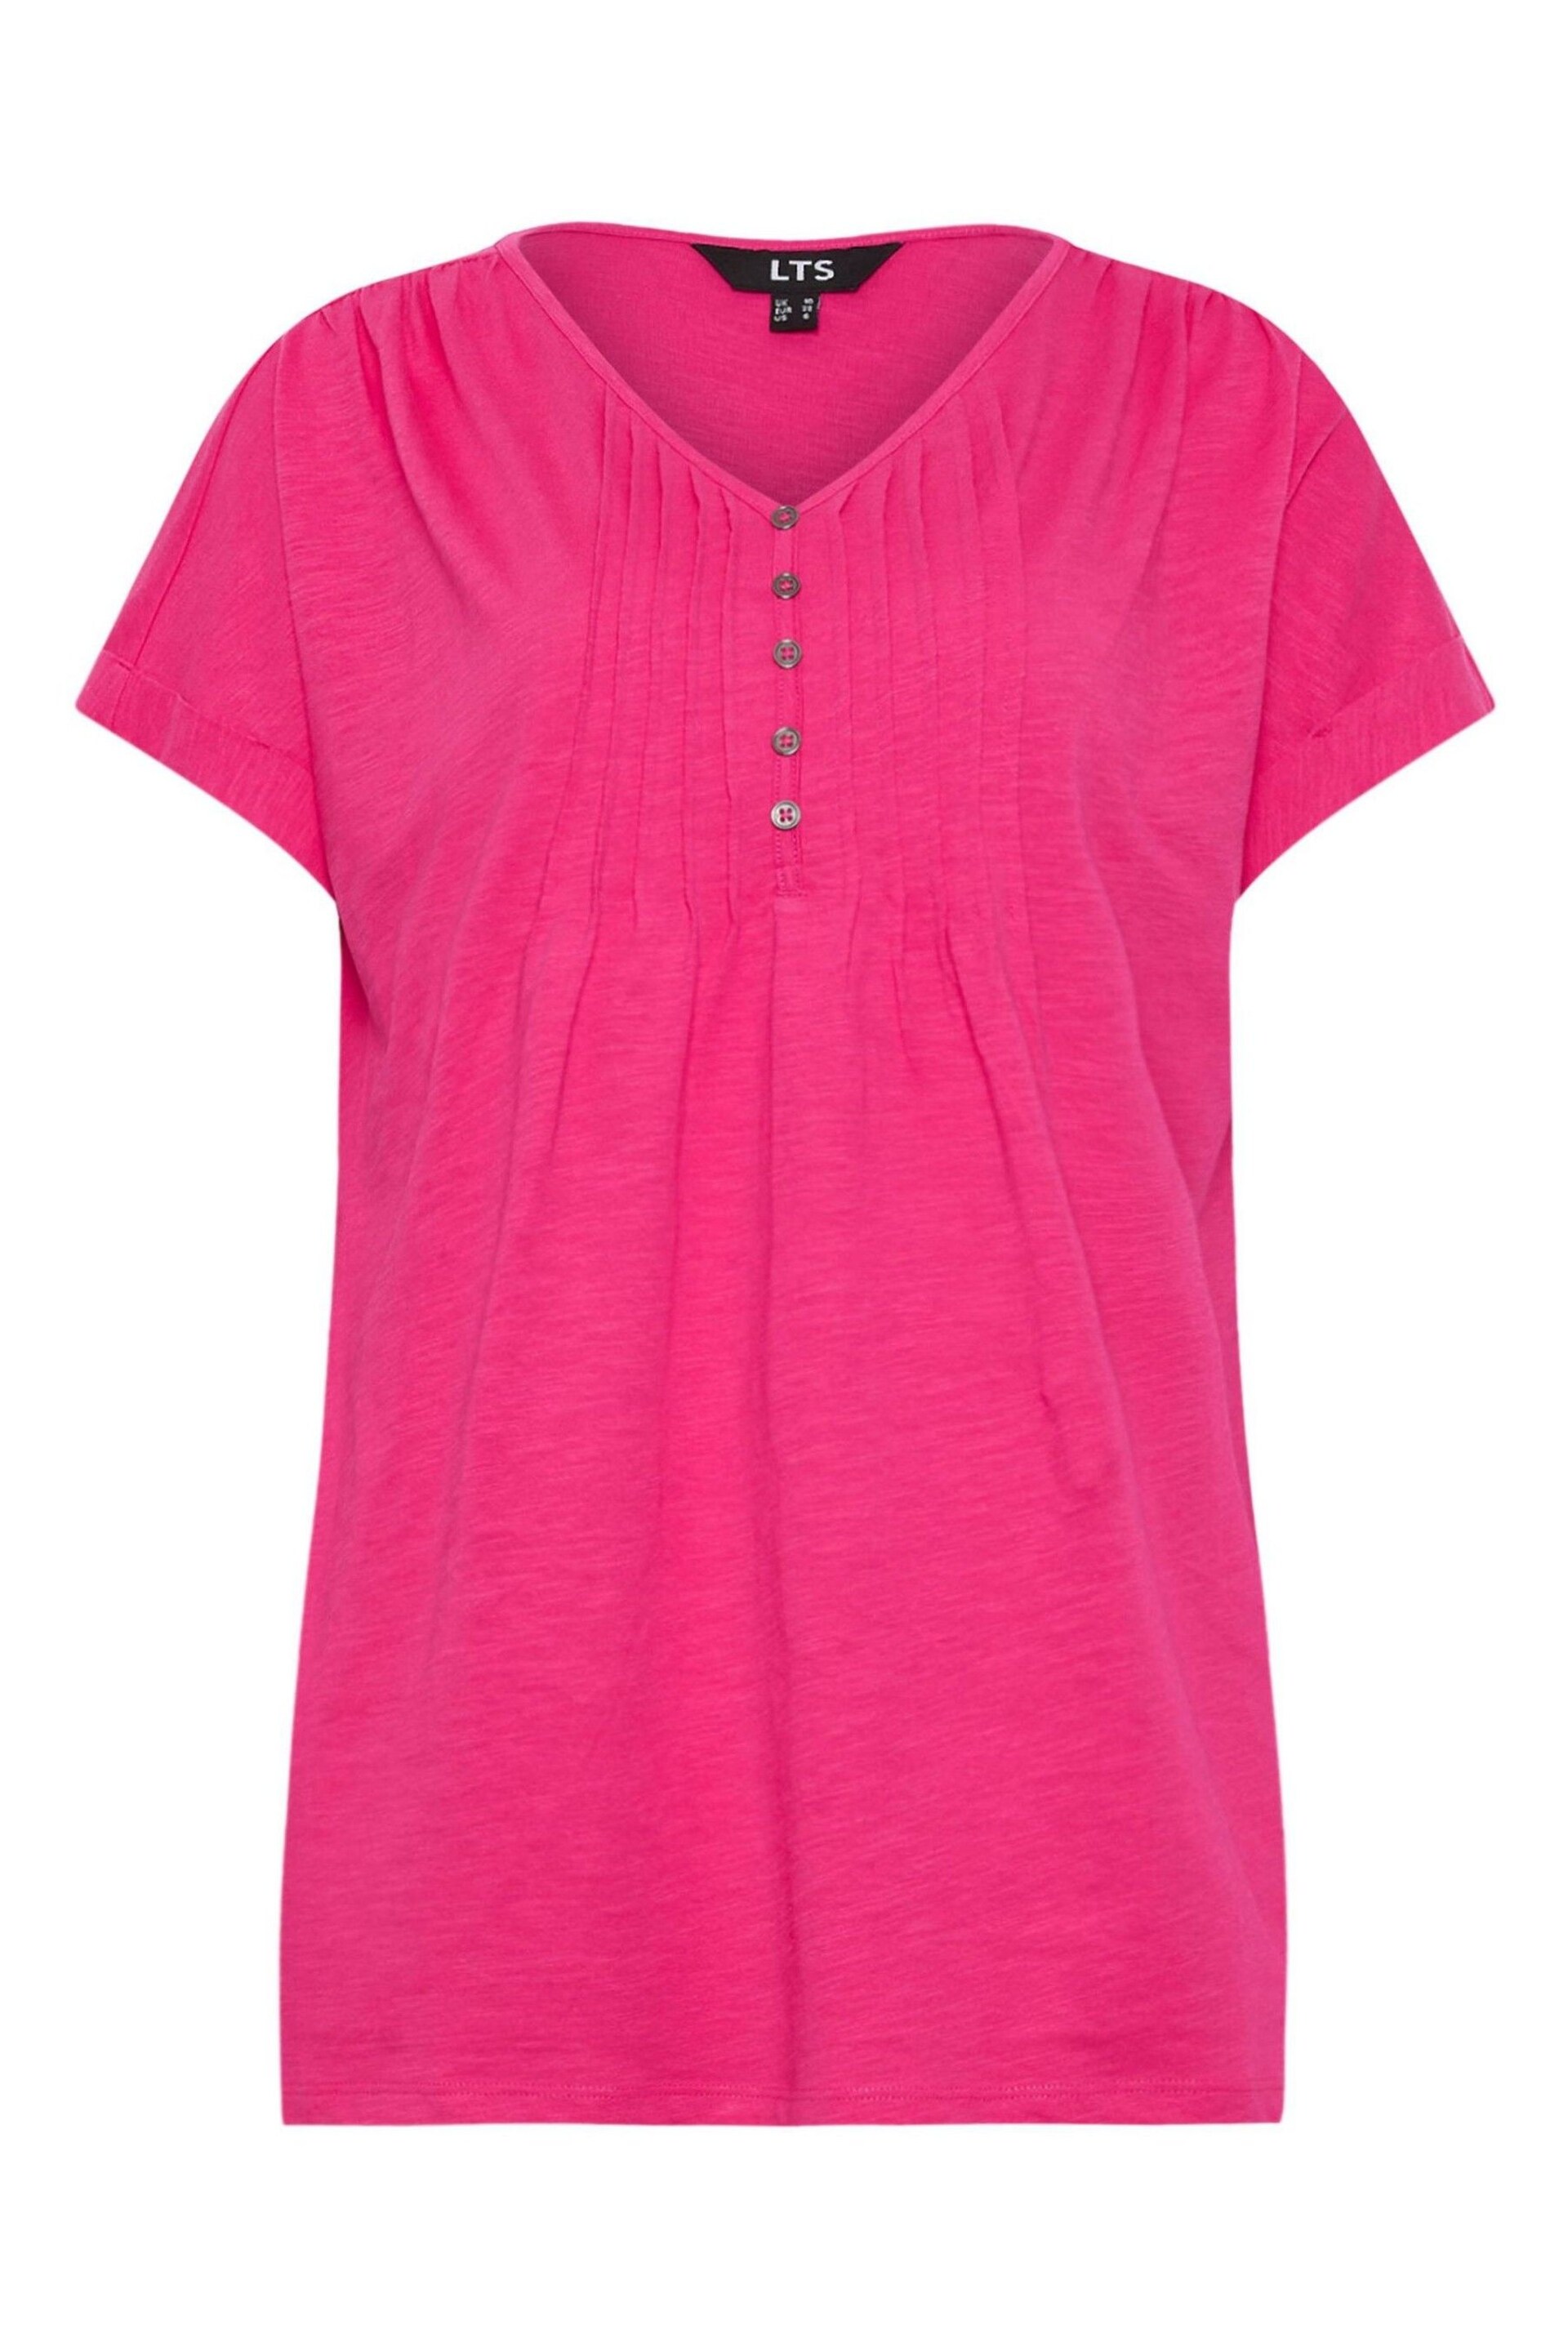 Long Tall Sally Pink LTS Tall Khaki Green Cotton Henley T-Shirt - Image 5 of 5